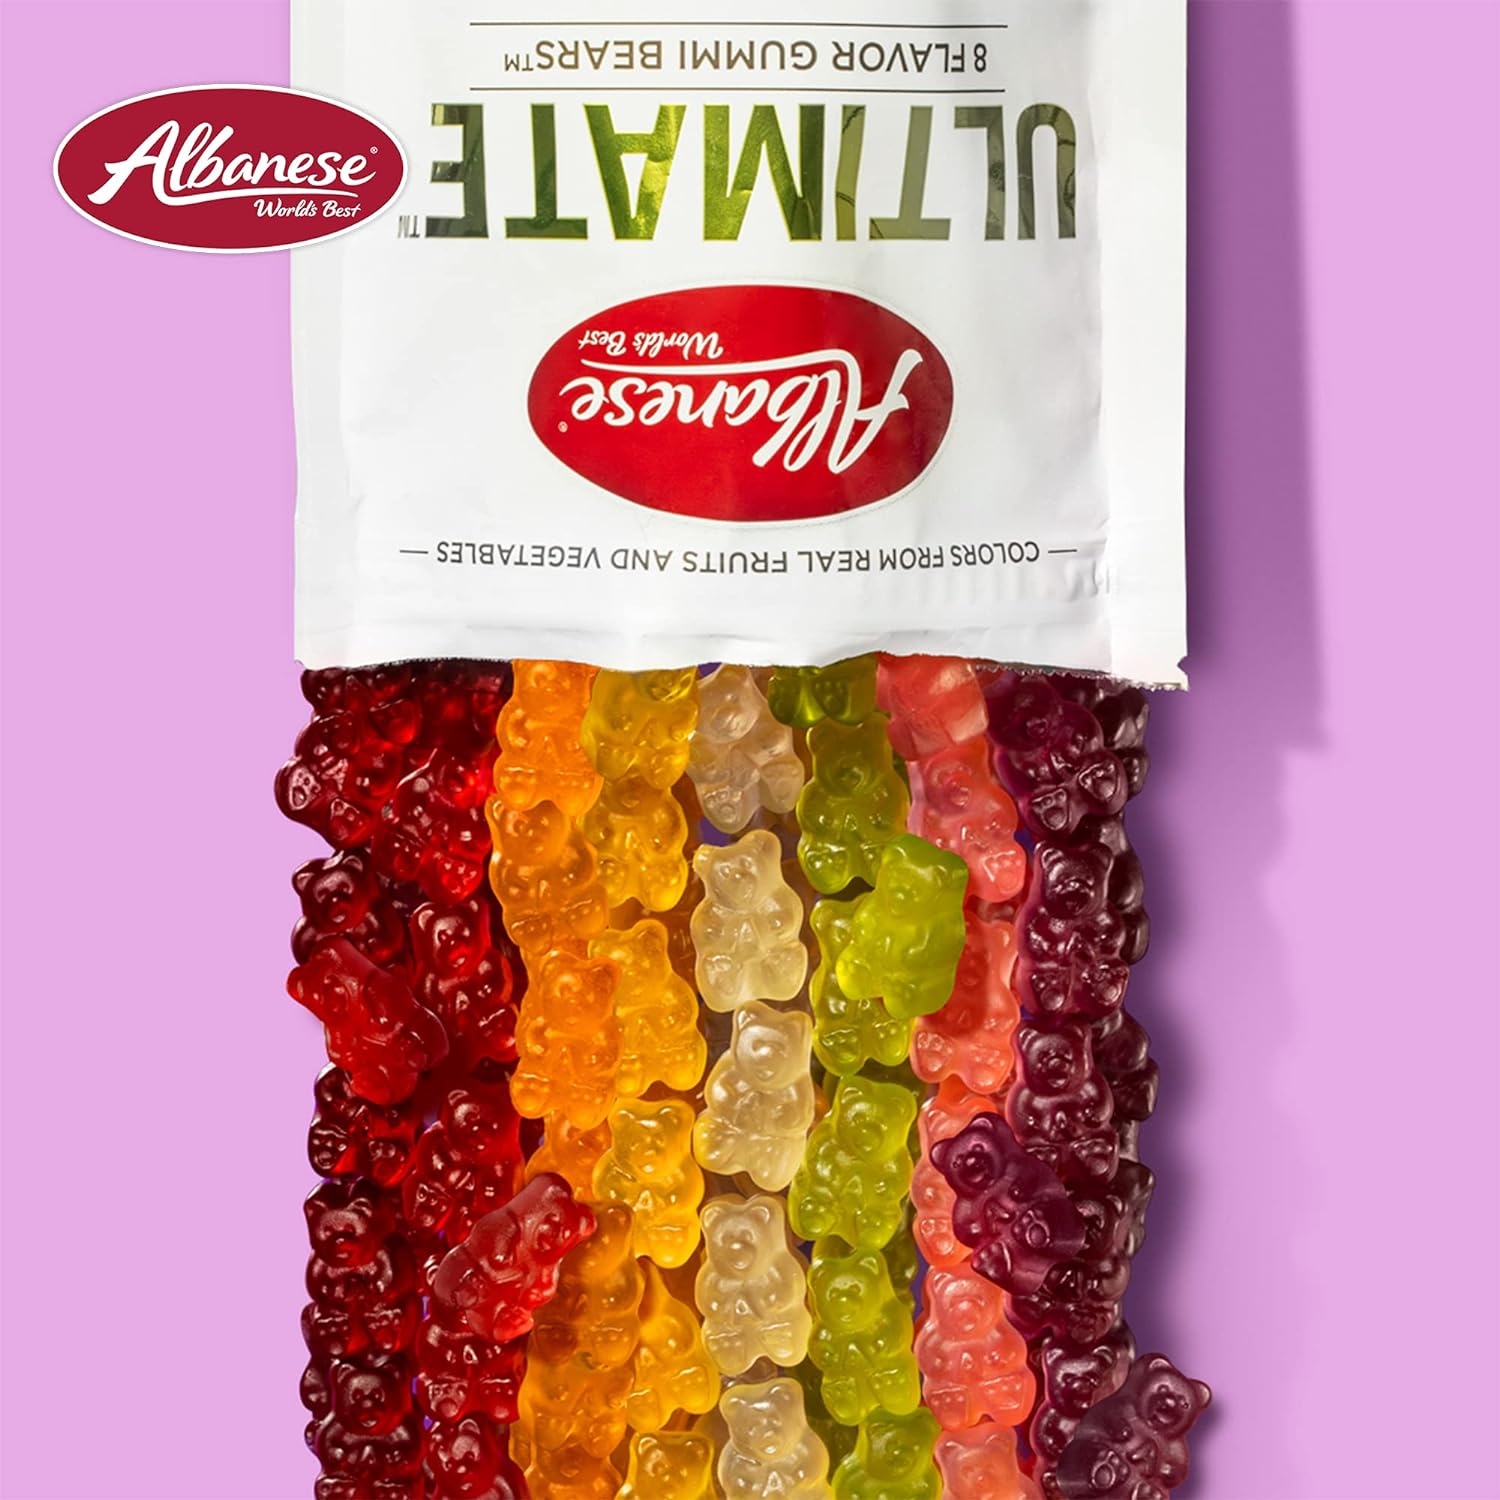 Albanese World's Best Ultimate 8 Flavor Gummi Bears, 25oz Bag of Easter Candy, Great Easter Basket Stuffers